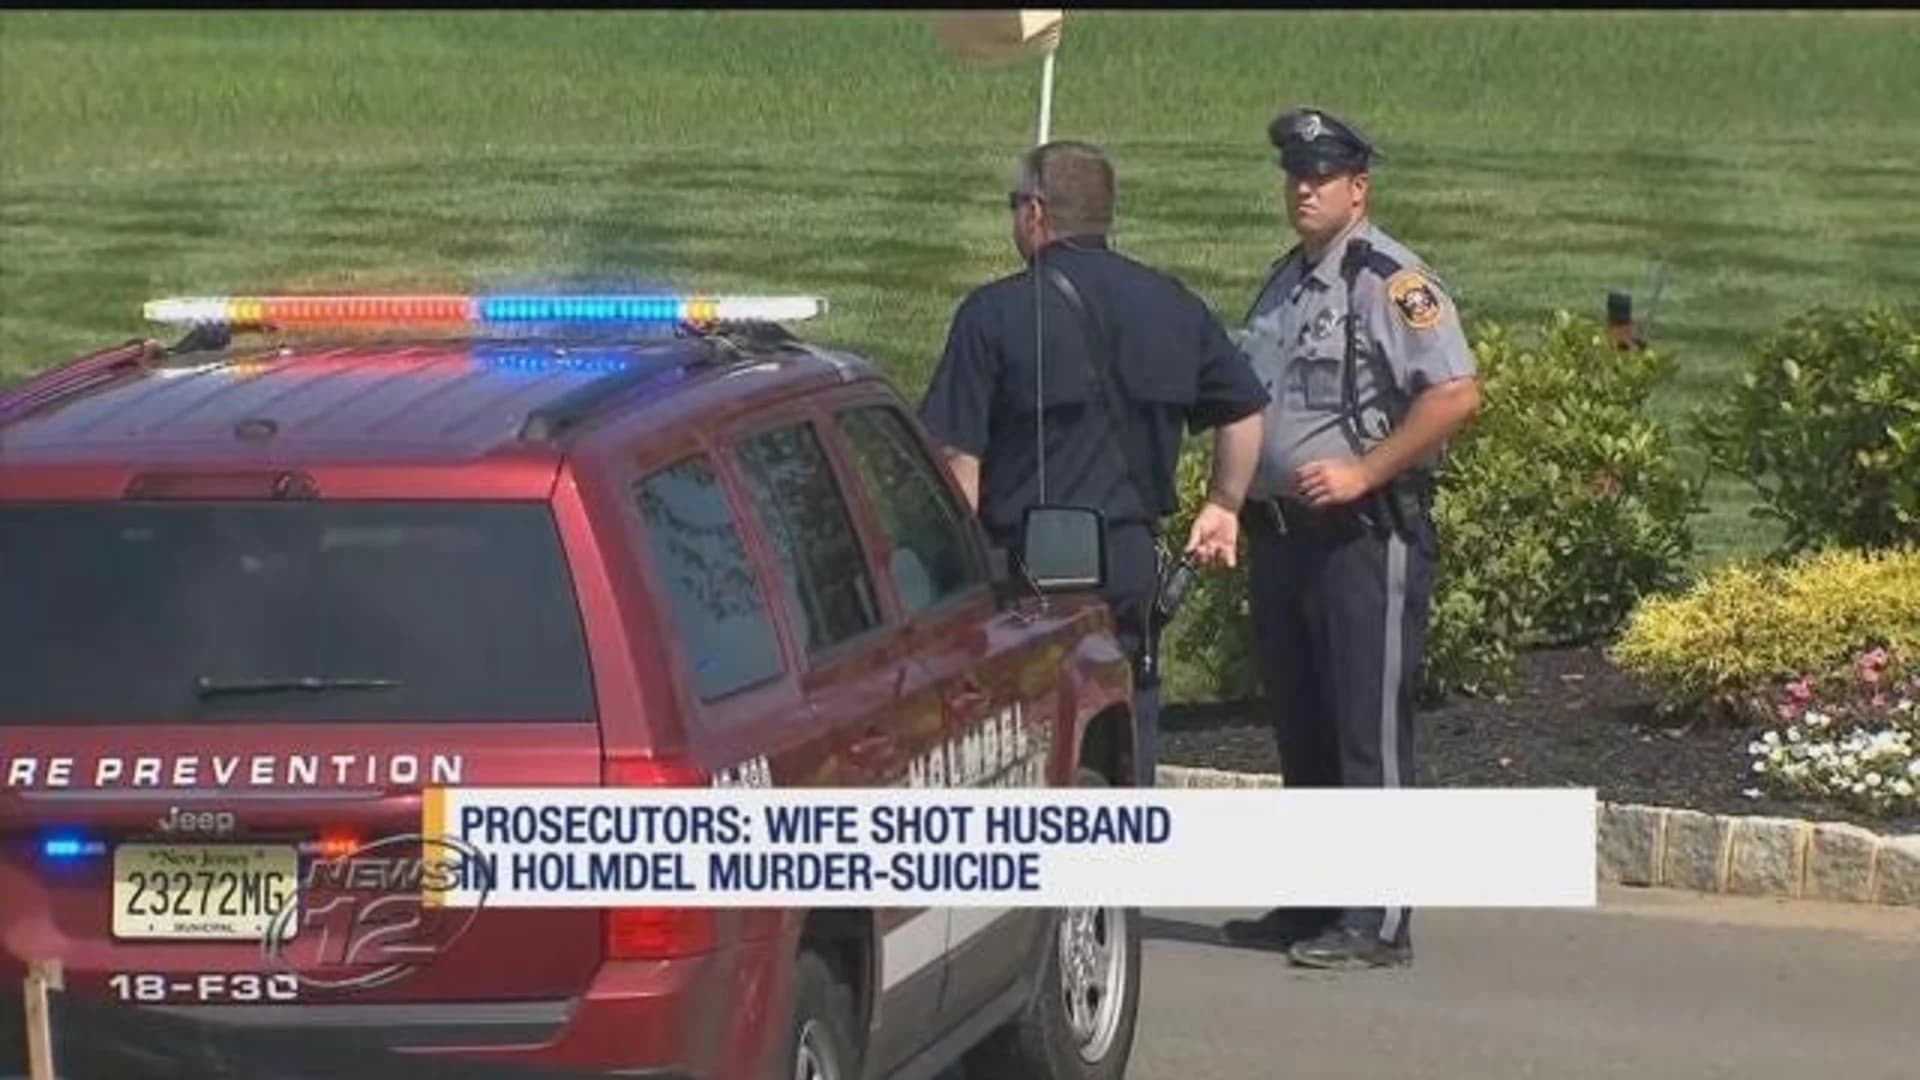 Prosecutors: Wife shot husband in Holmdel murder-suicide